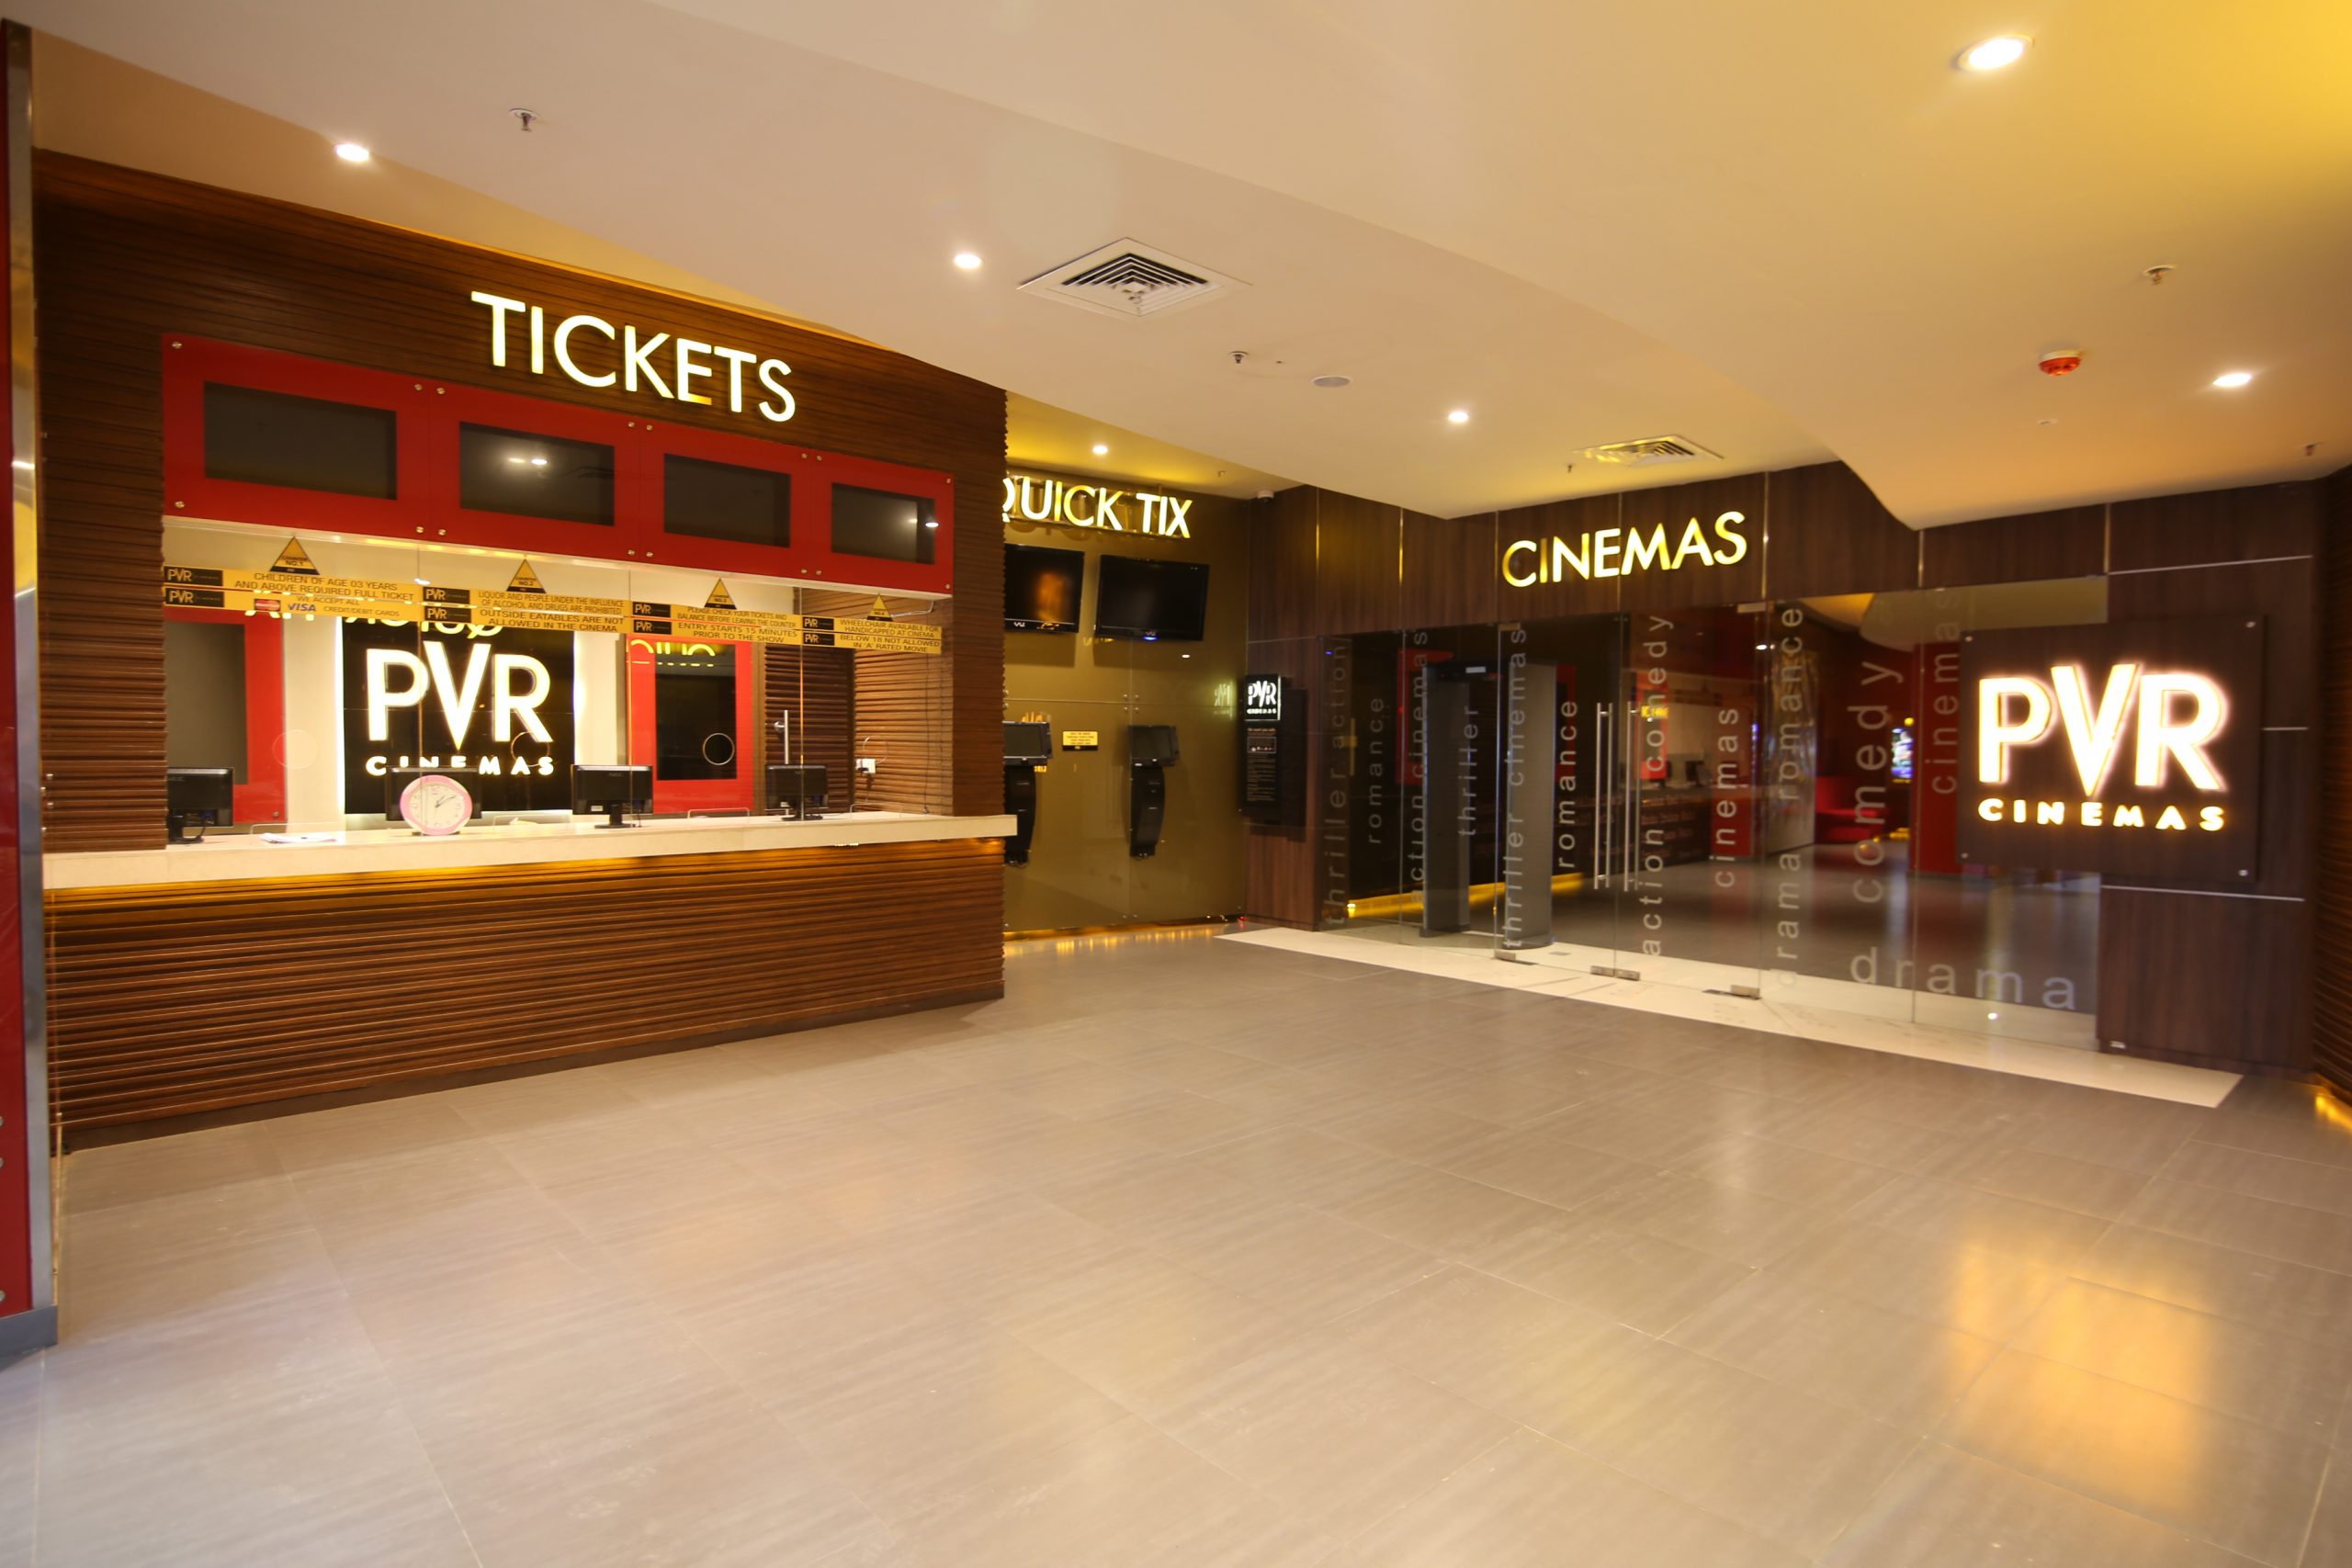 PVR Cinemas reopen its theatres in Maharashtra | Entertainment